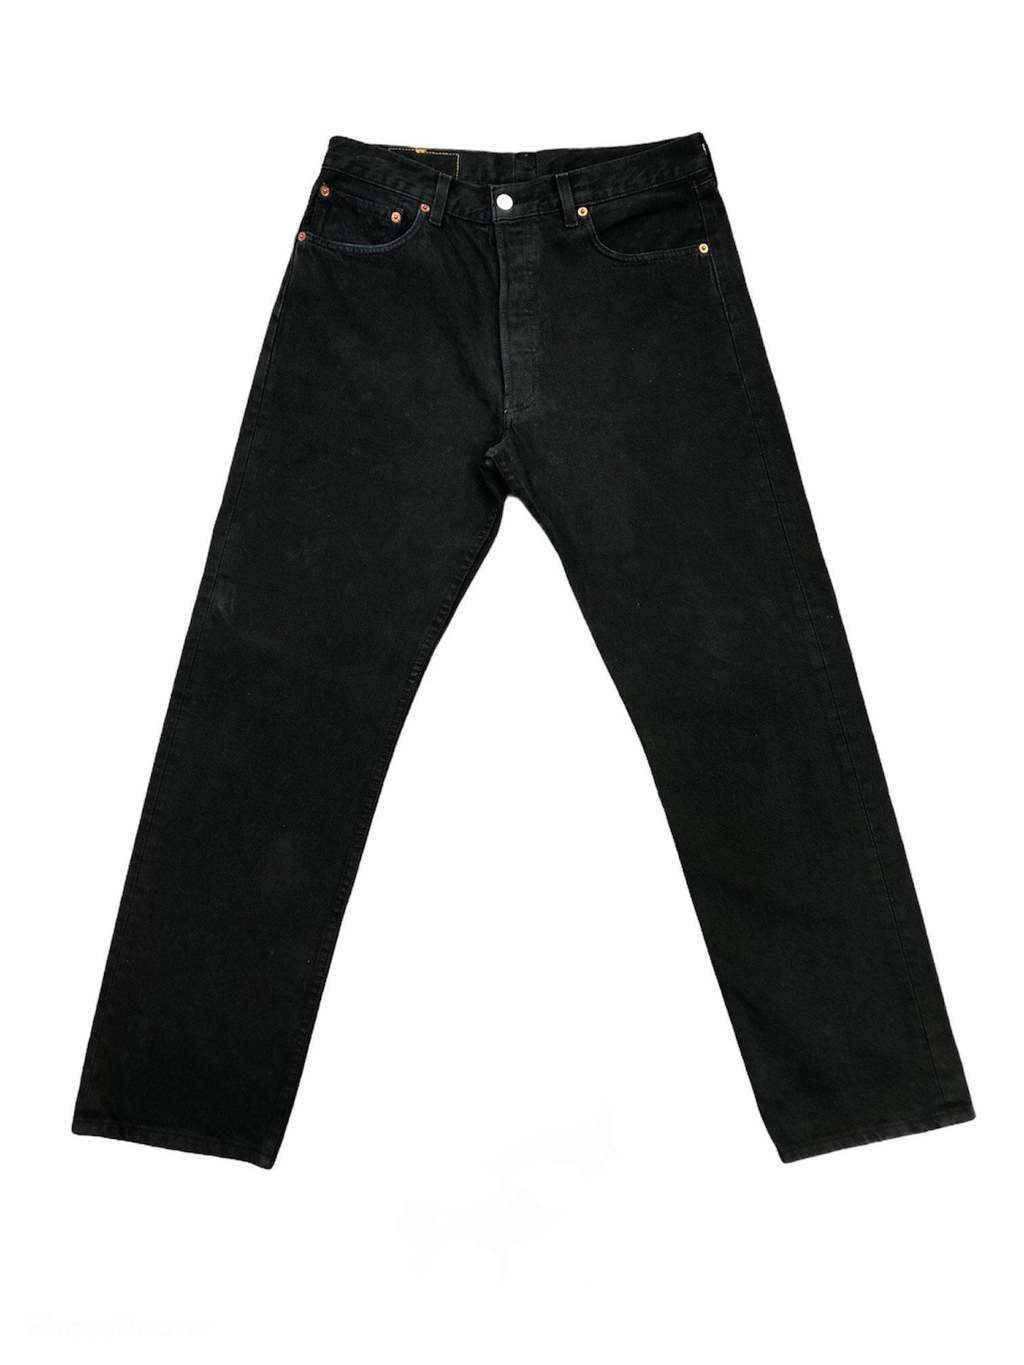 90s vintage Levis 501 jeans in black-grey, grunge denim - W31 x L30 - St  Cyr Vintage